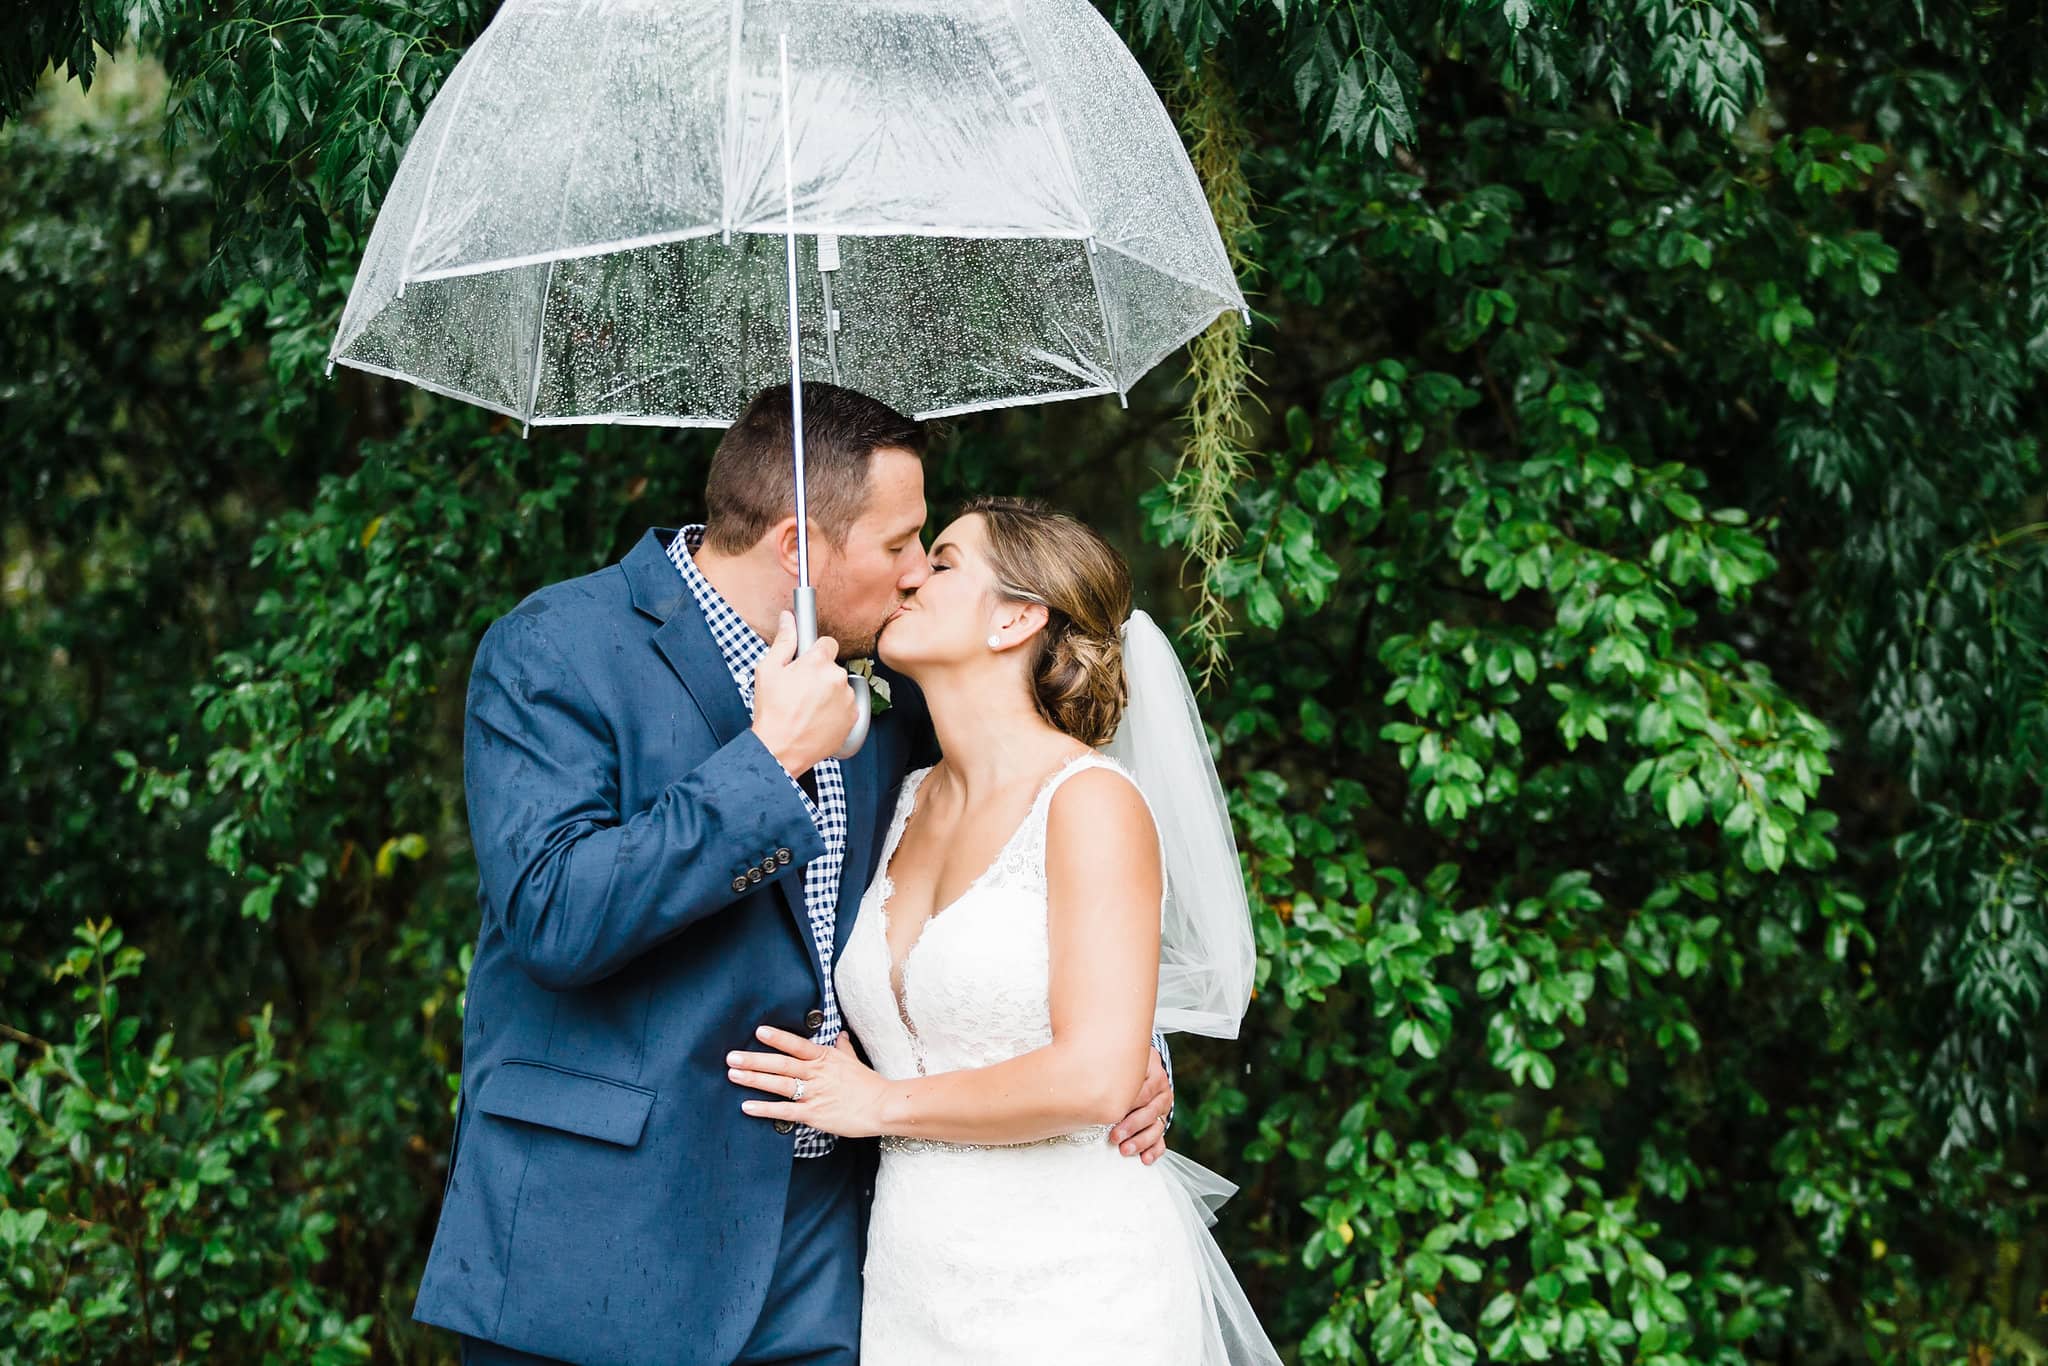 rainy wedding photos with bride and groom kissing under umbrella